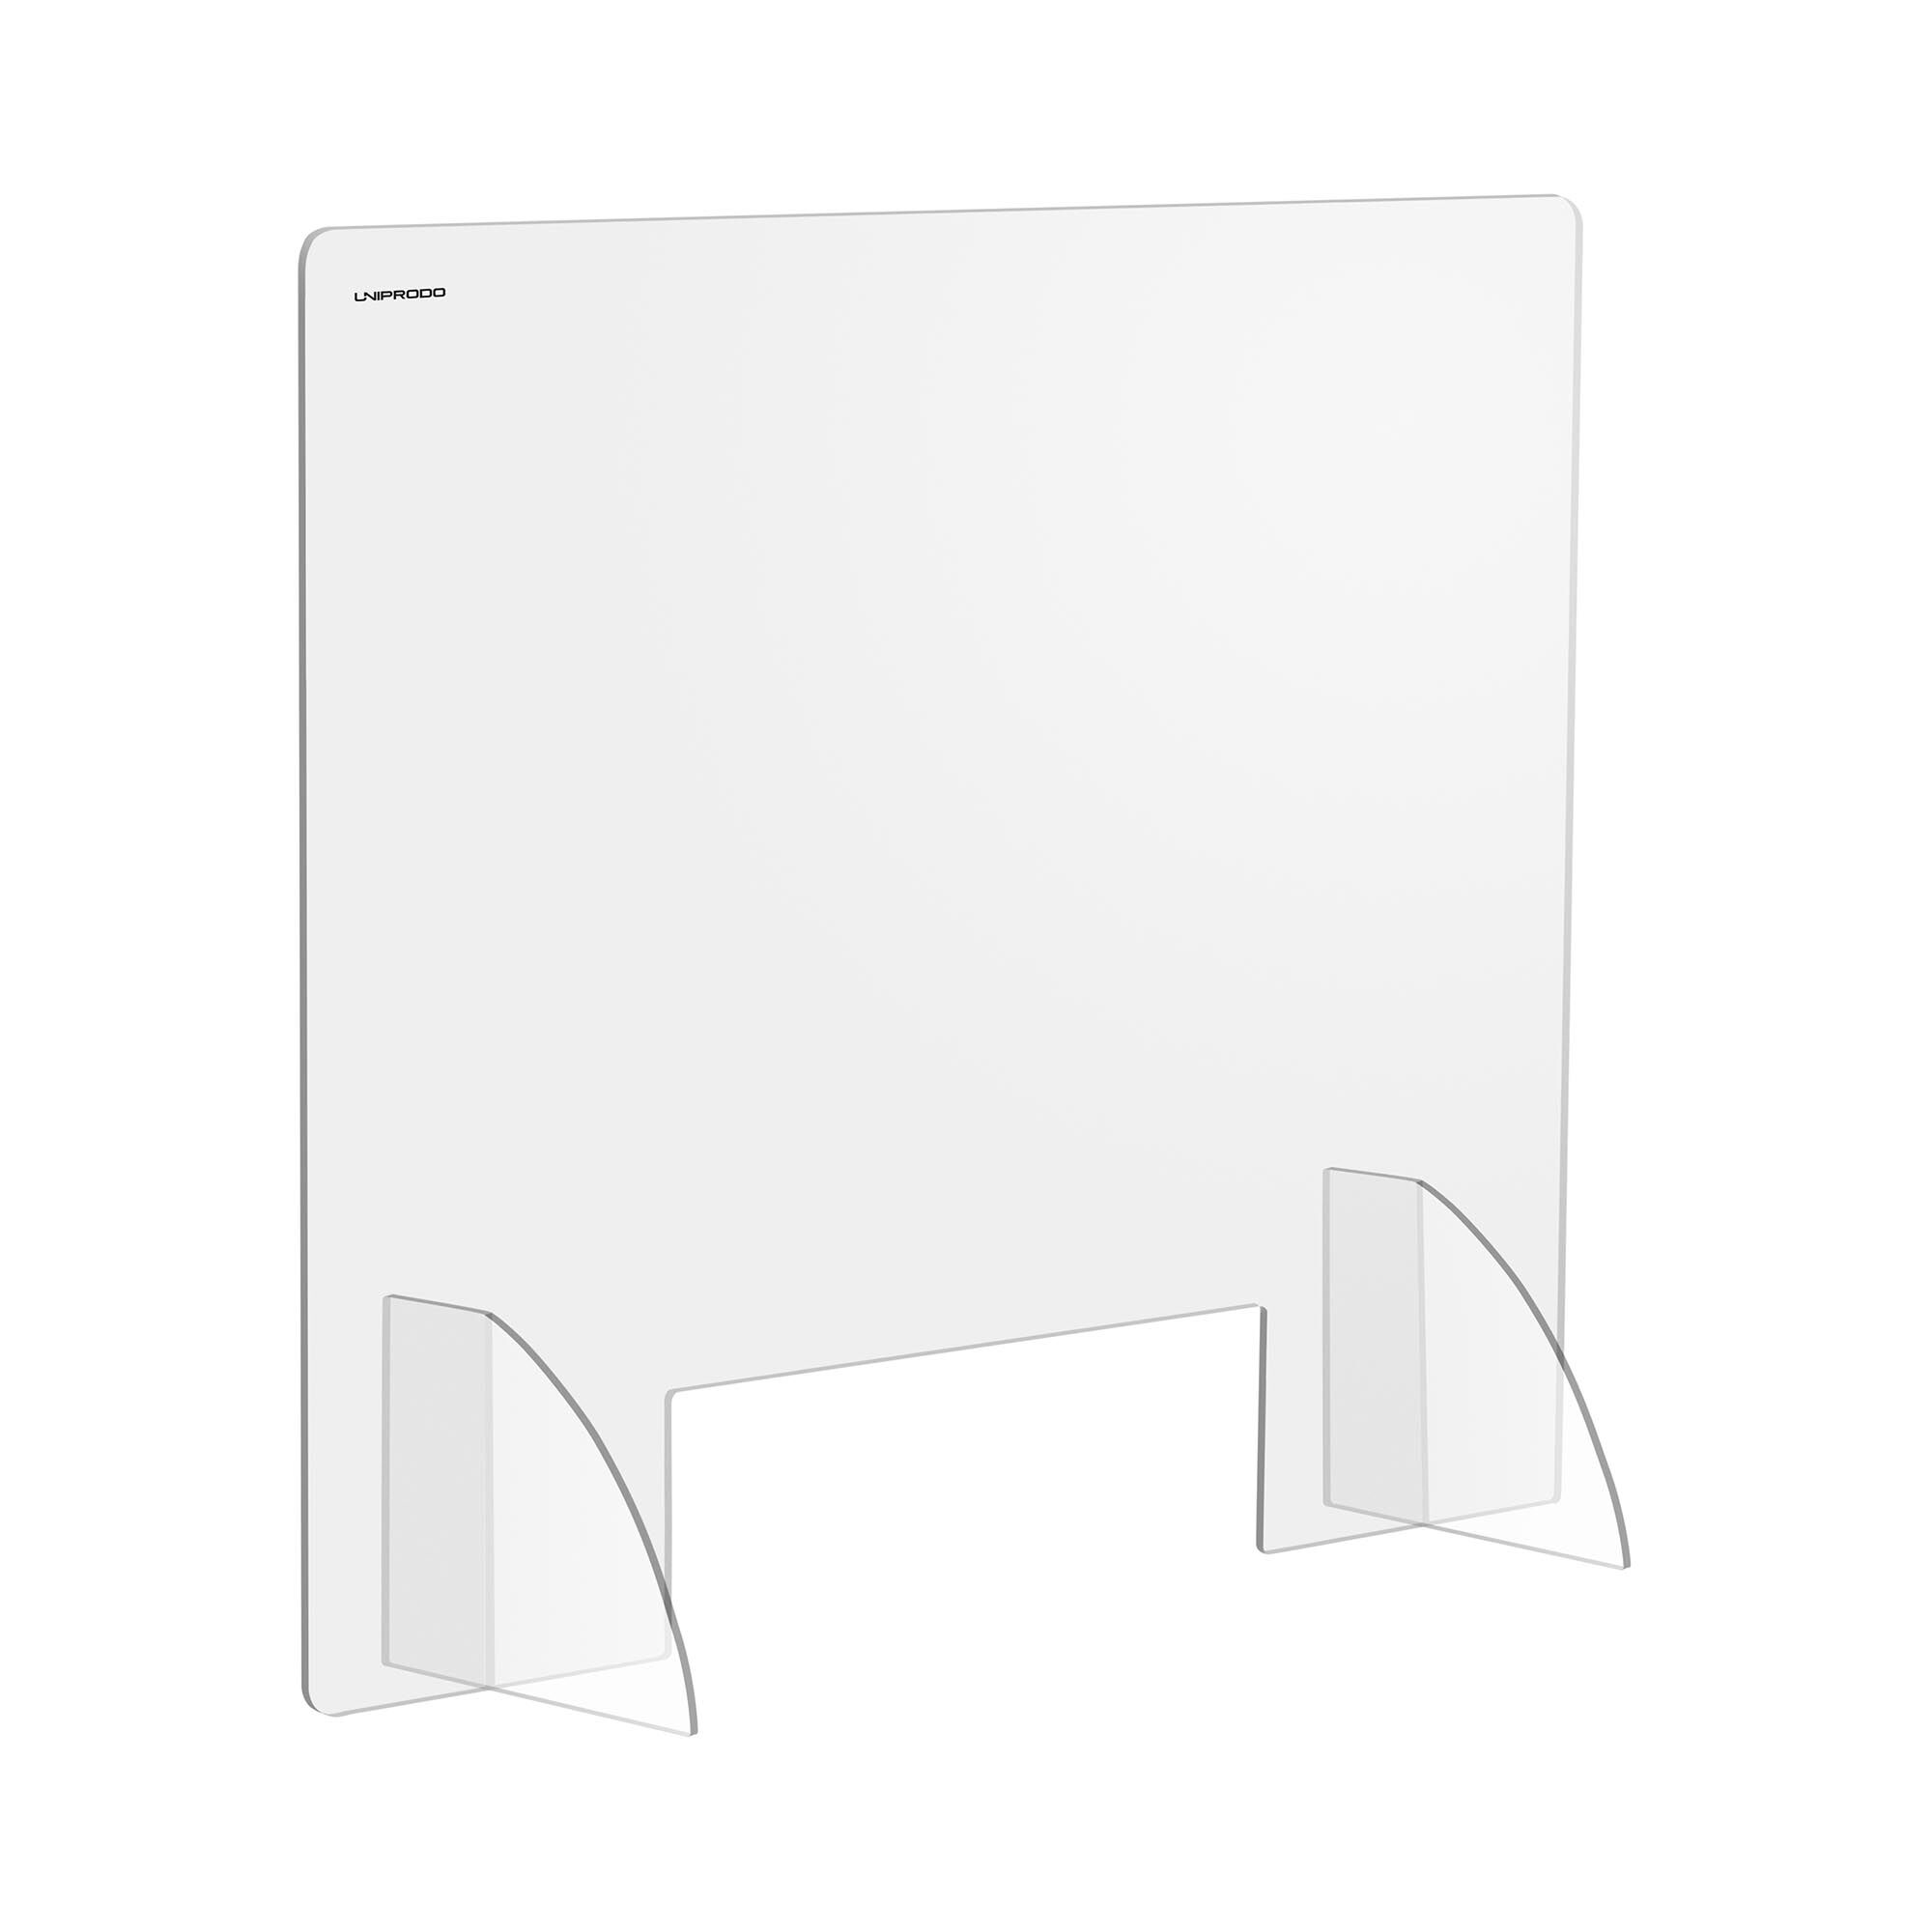 Uniprodo Hoestscherm - 95 x 80 cm - Acrylglas - doorlaat 30 x 10 cm UNI-PPG02